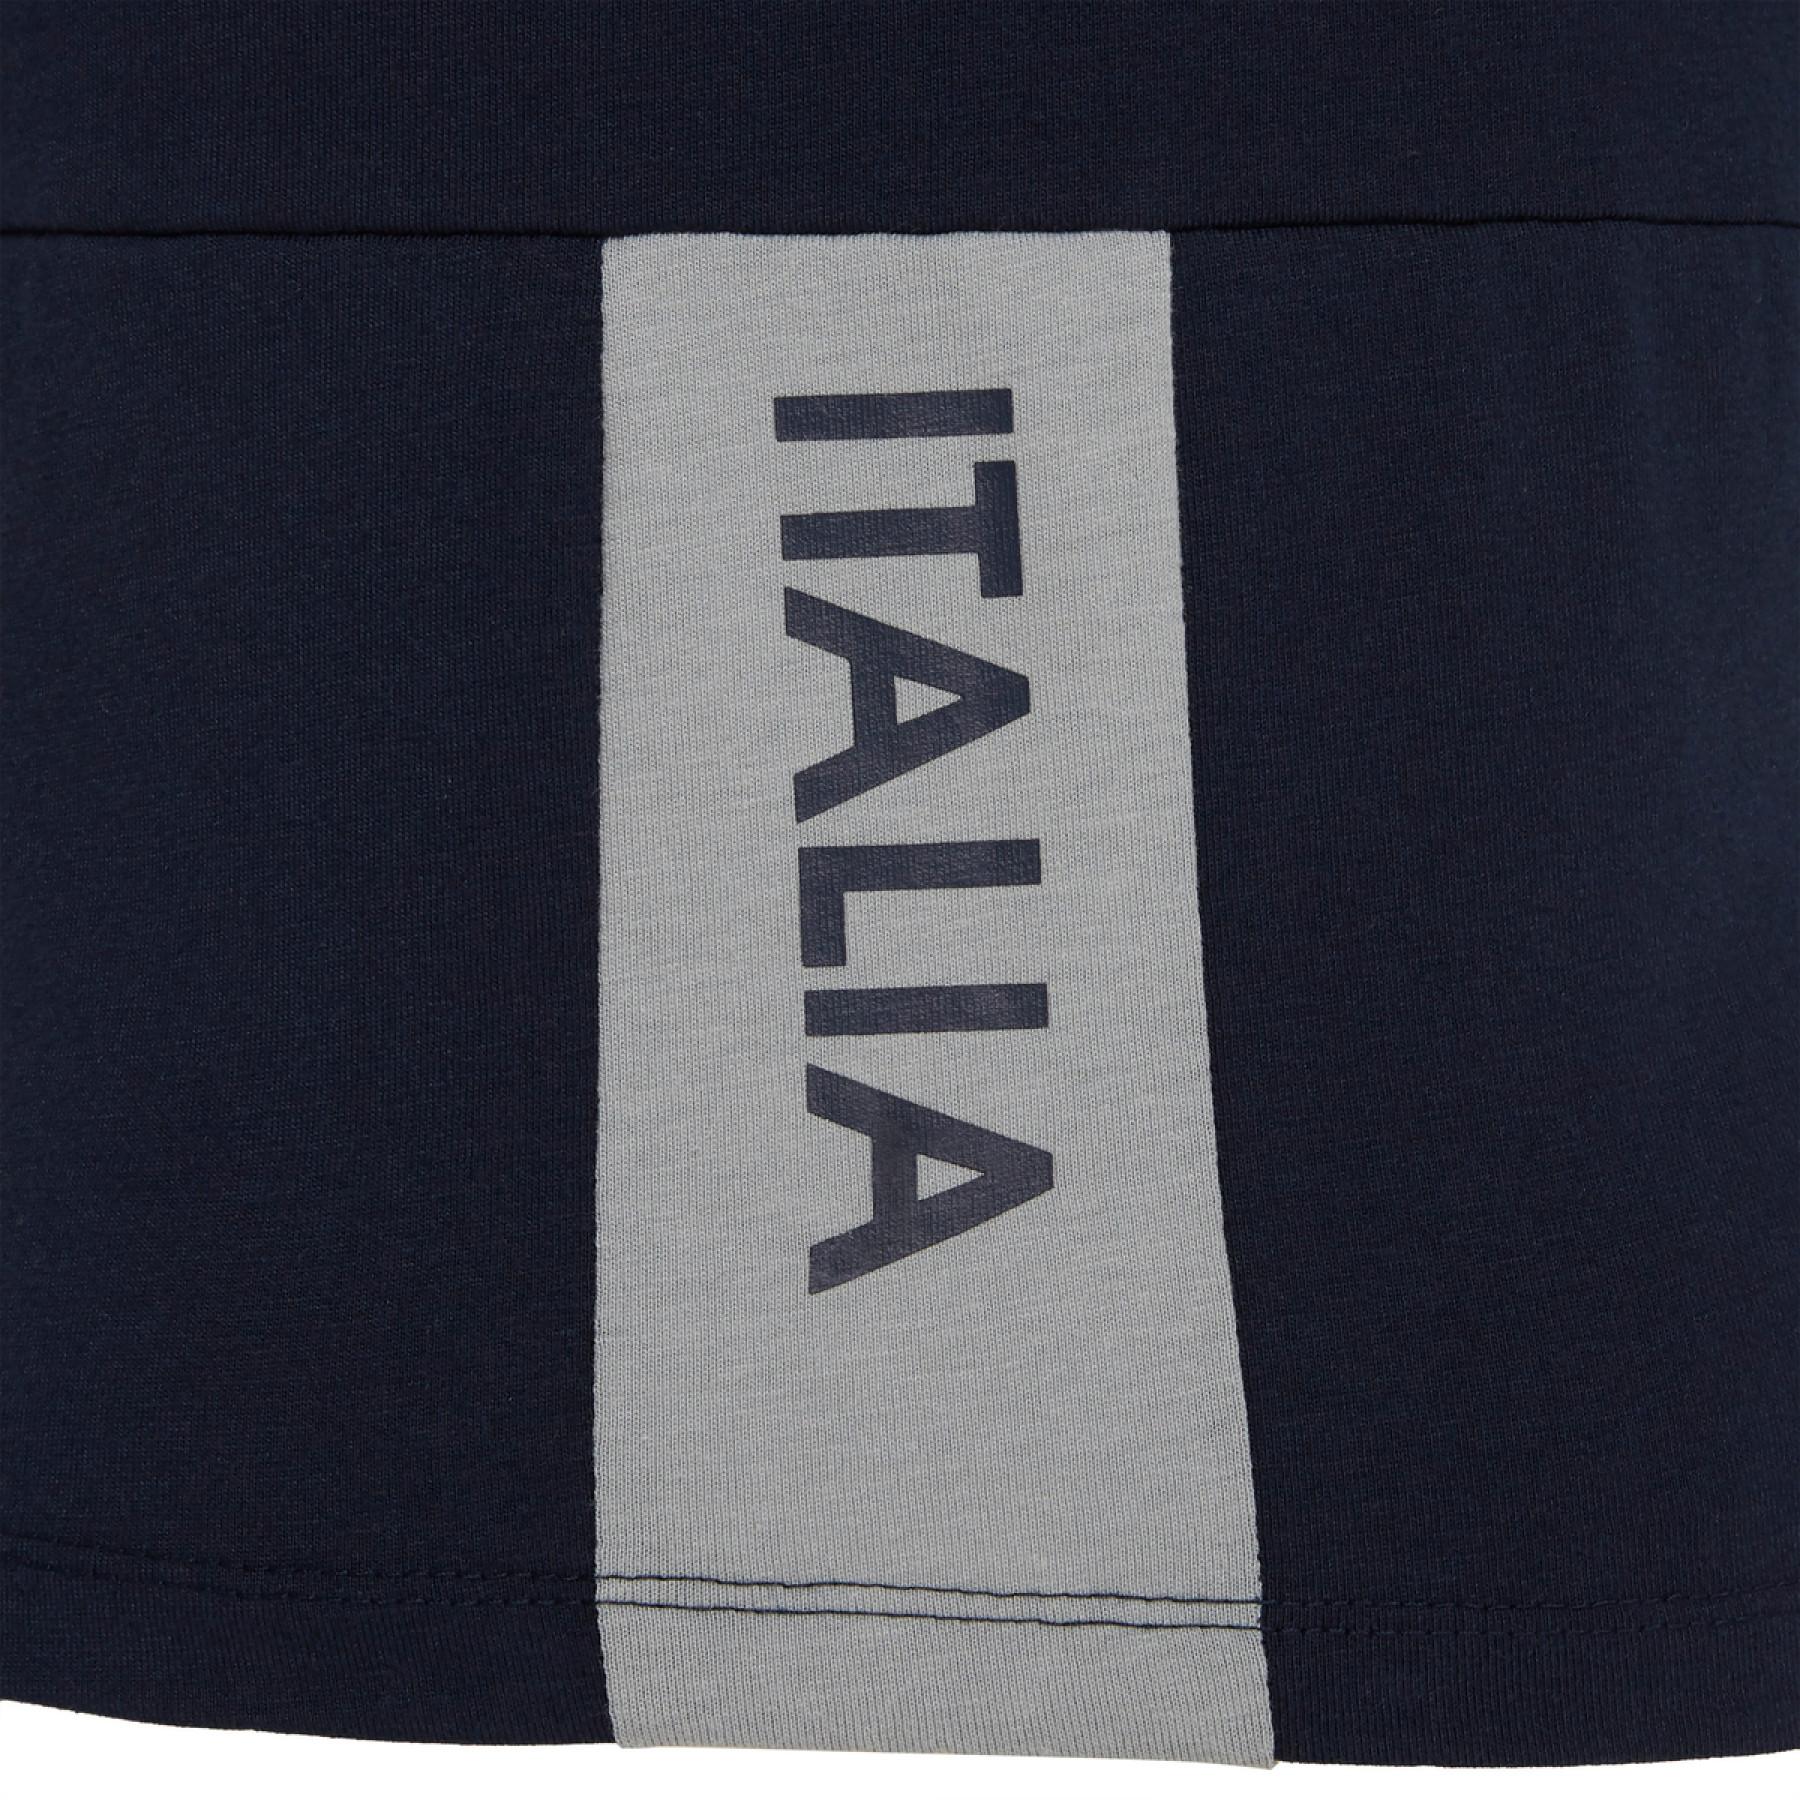 T-shirt enfant voyage Italie rugby  2019